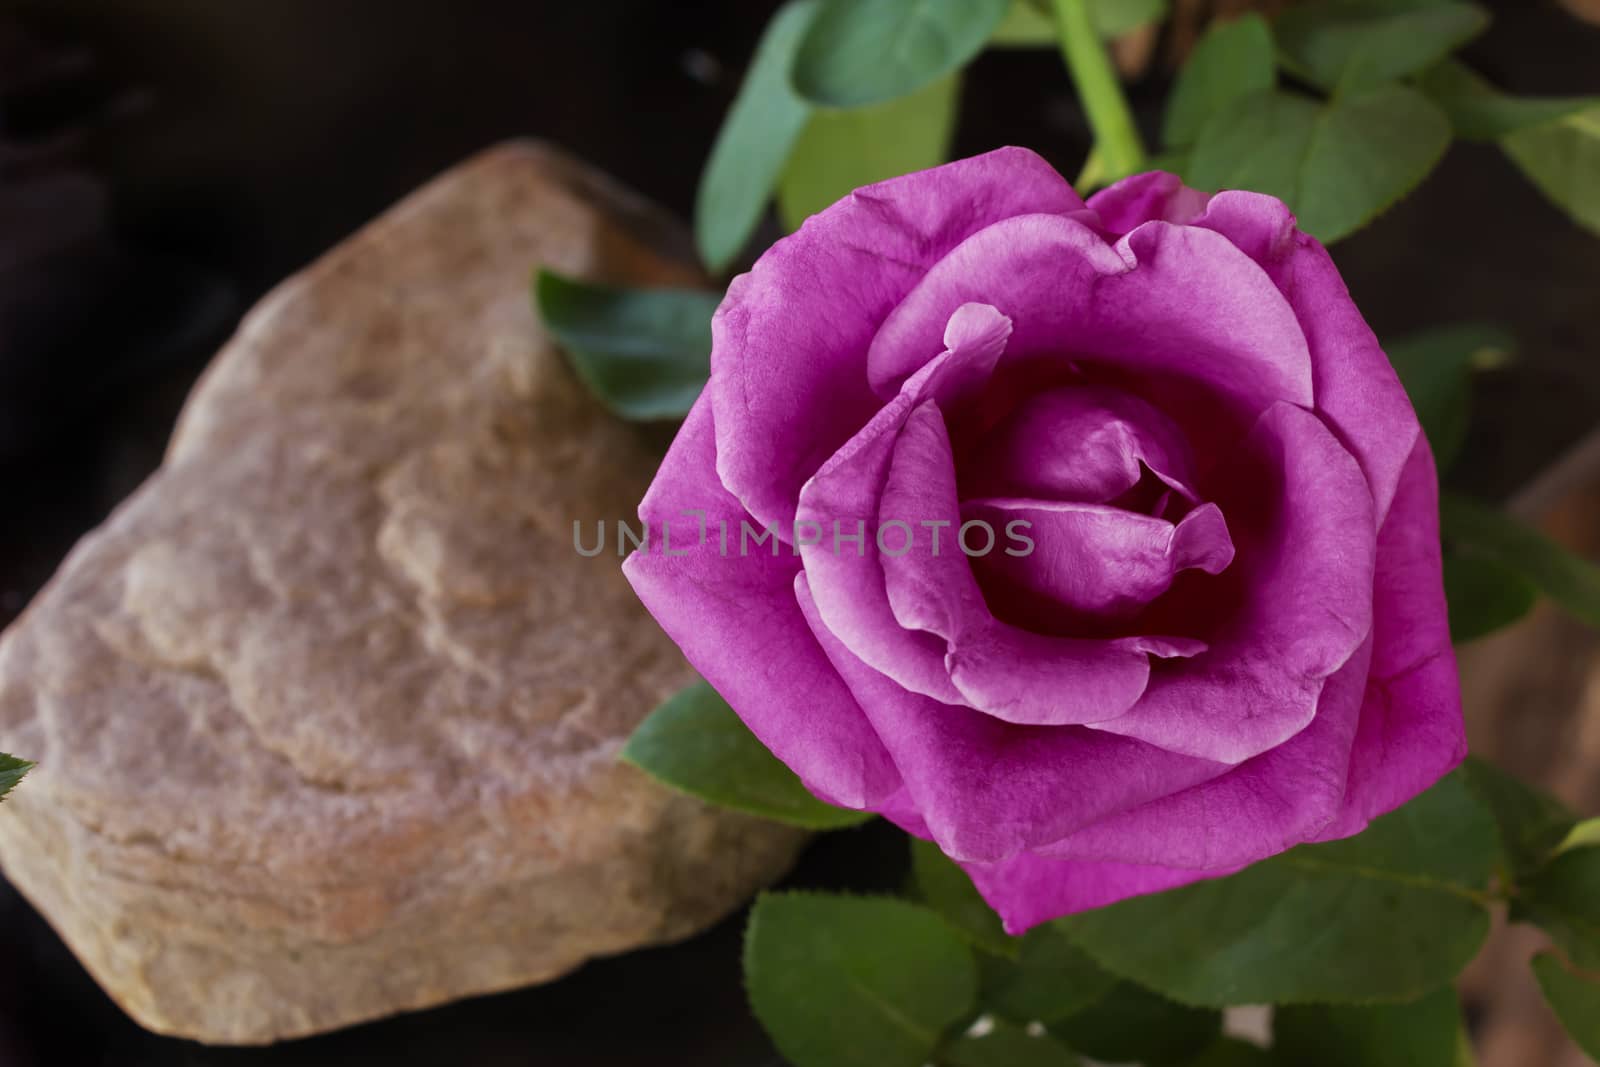 Violet perple rose flower with rock on dark background by KAZITAFAHNIZEER